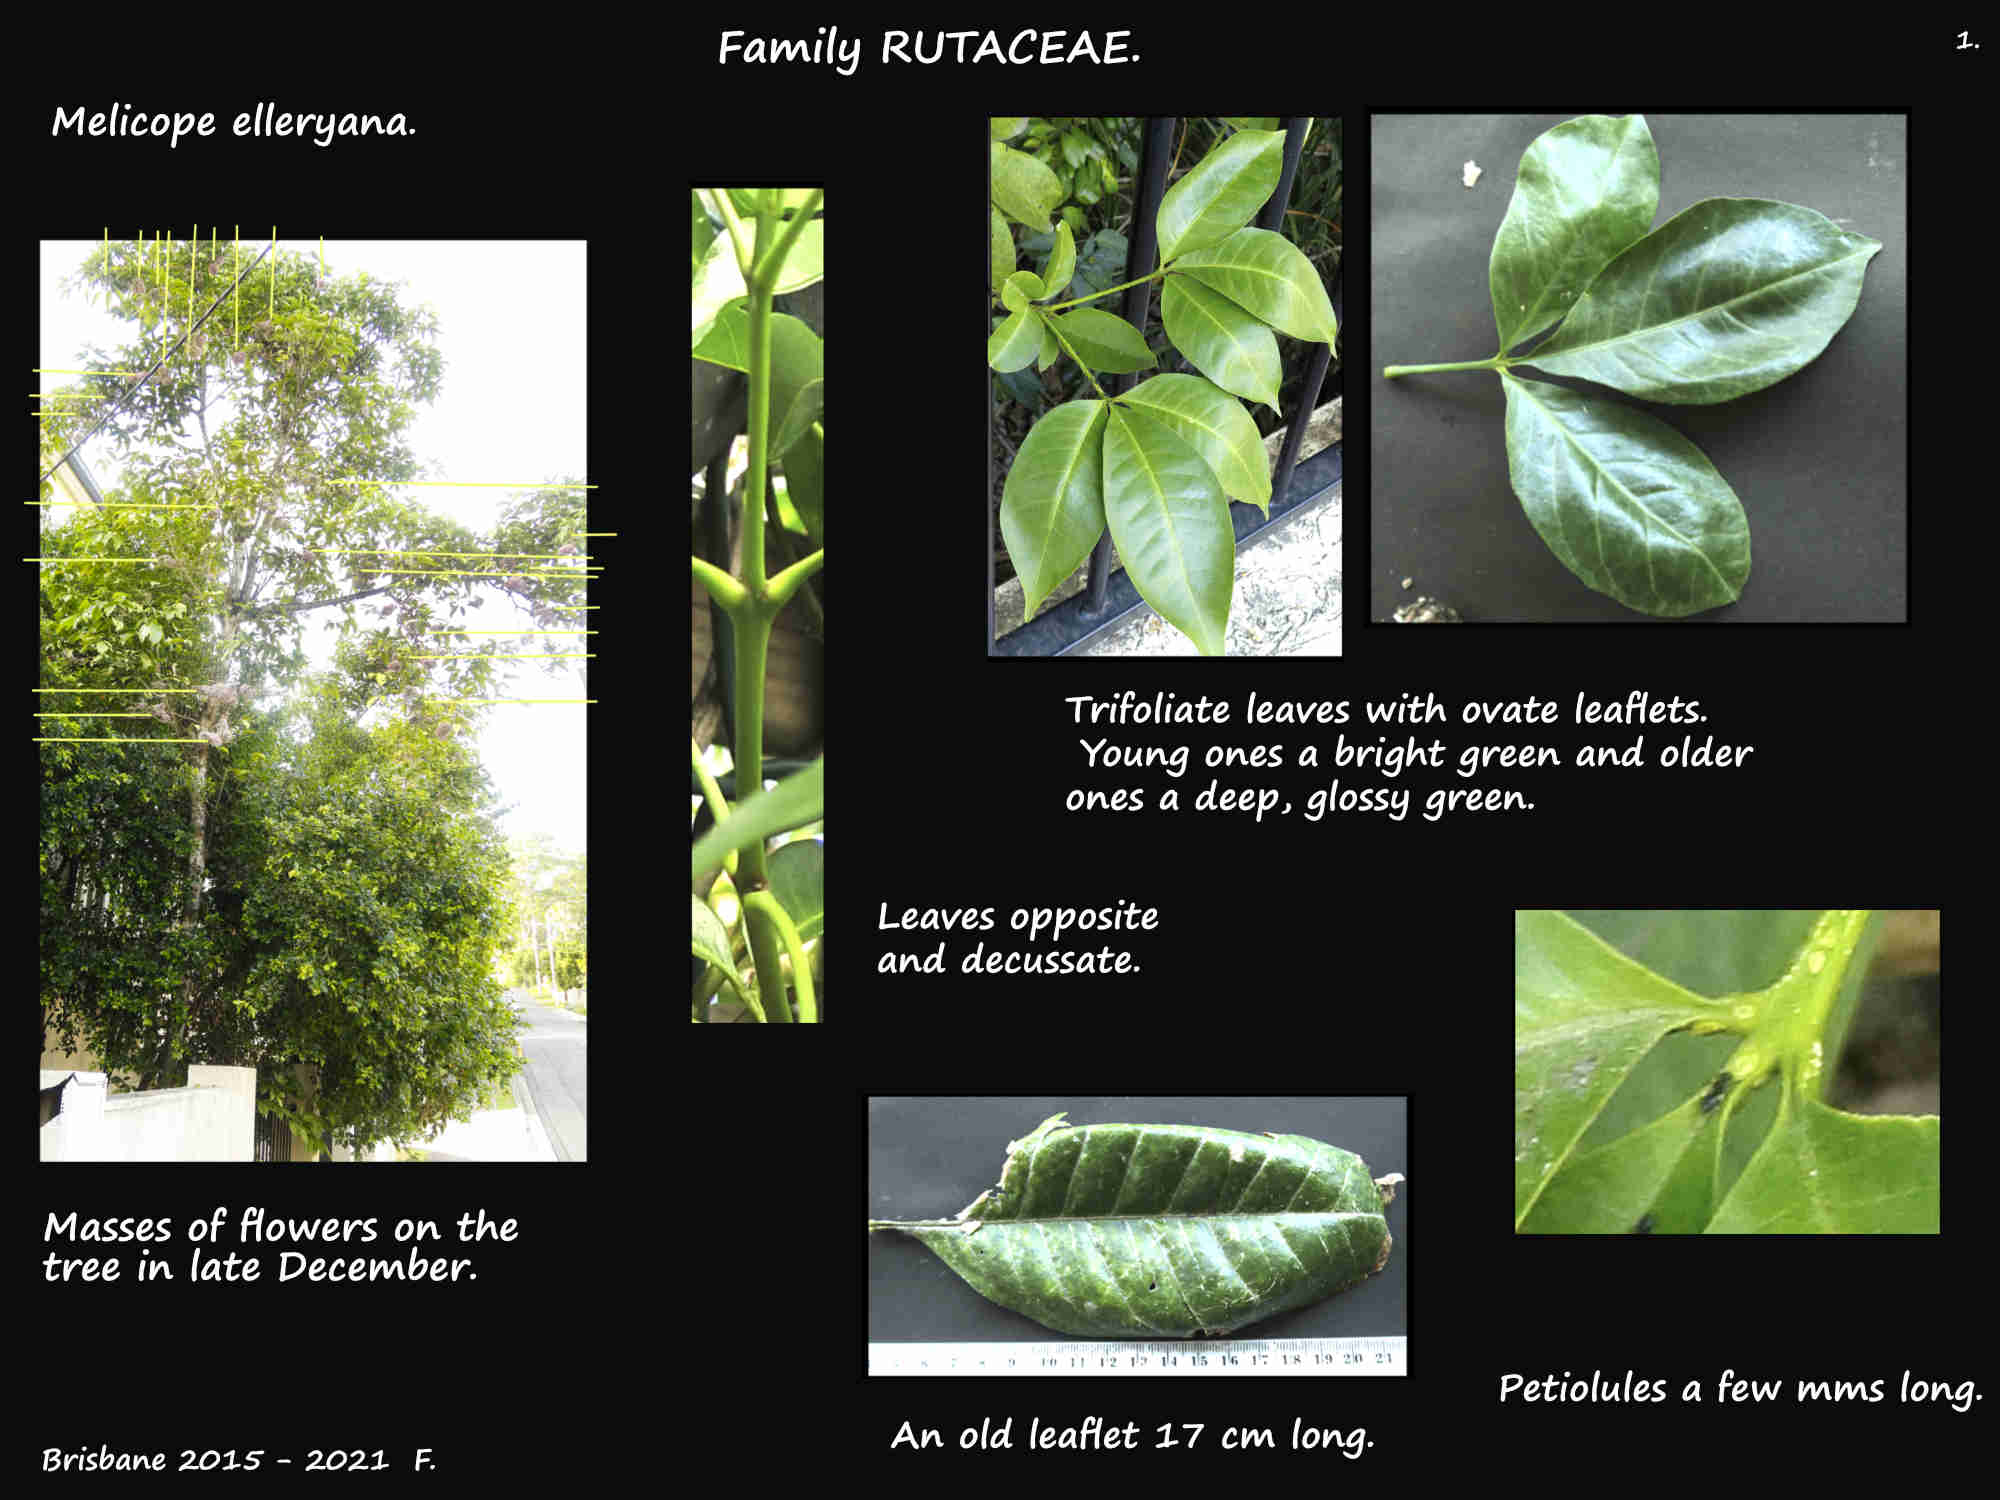 1 Melicope elleryana tree & leaves